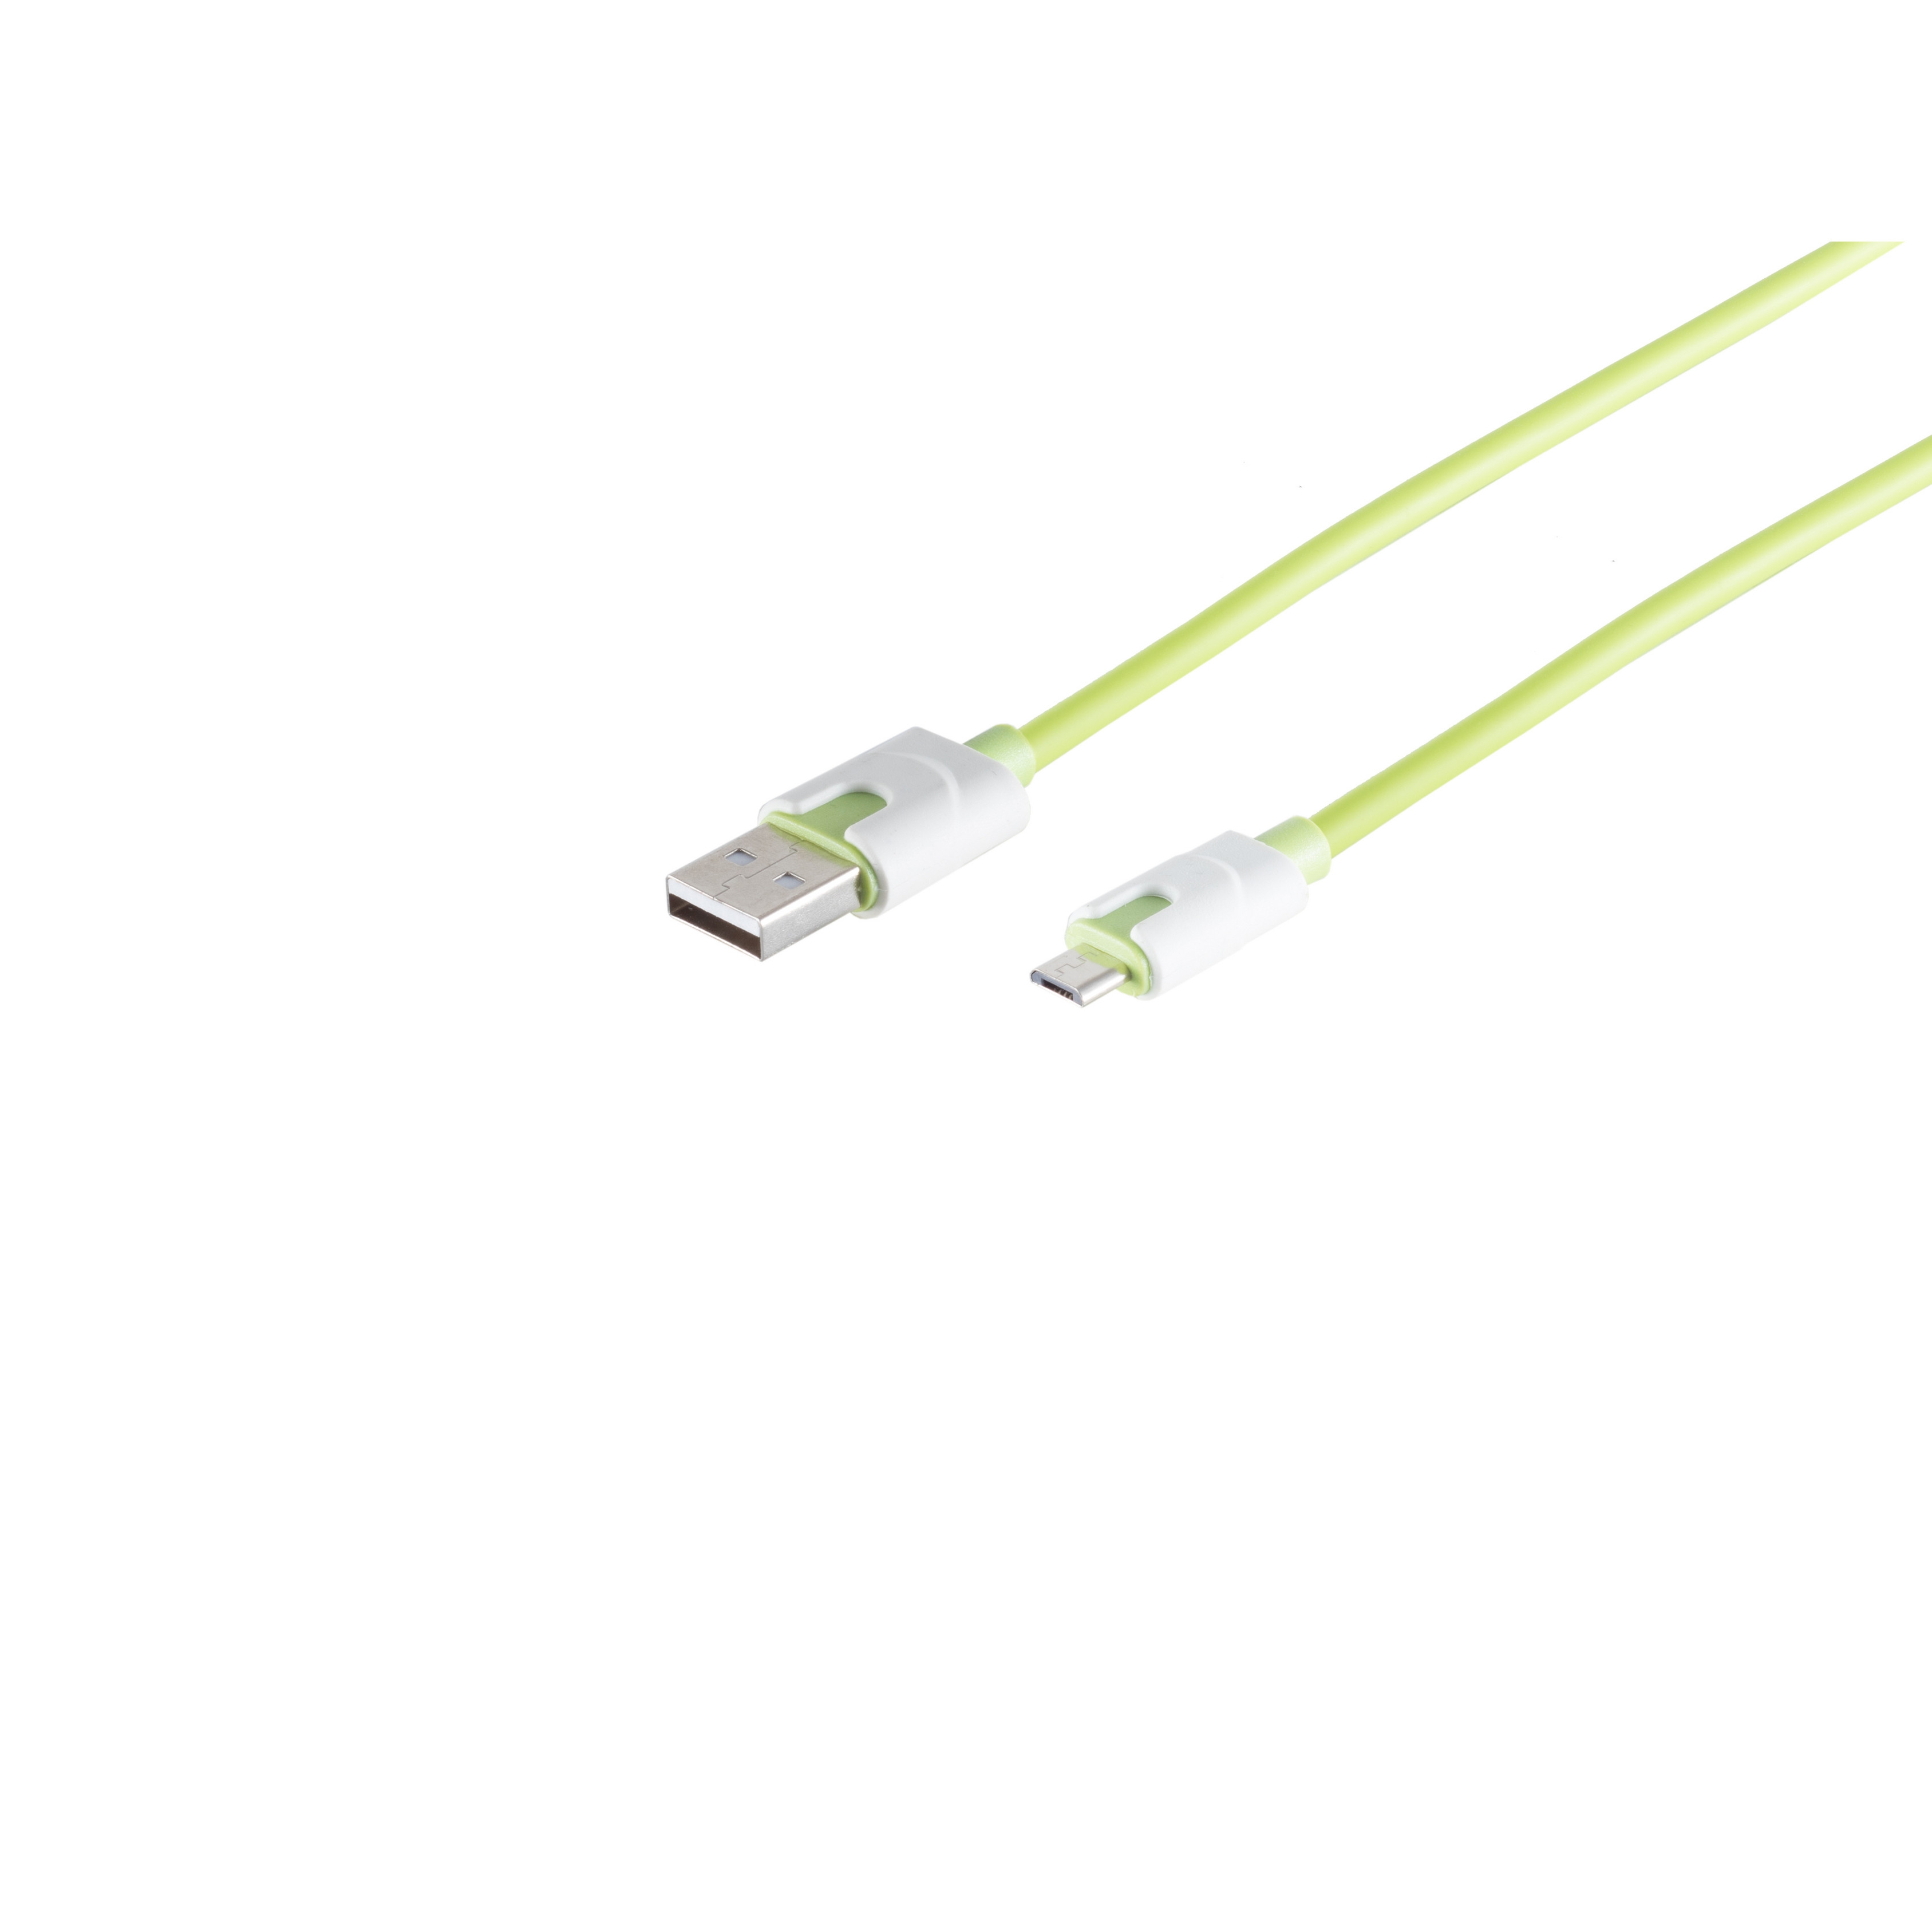 MAXIMUM USB Stecker Micro auf A USB-Ladekabel 0,3m S/CONN Kabel B, CONNECTIVITY grün,